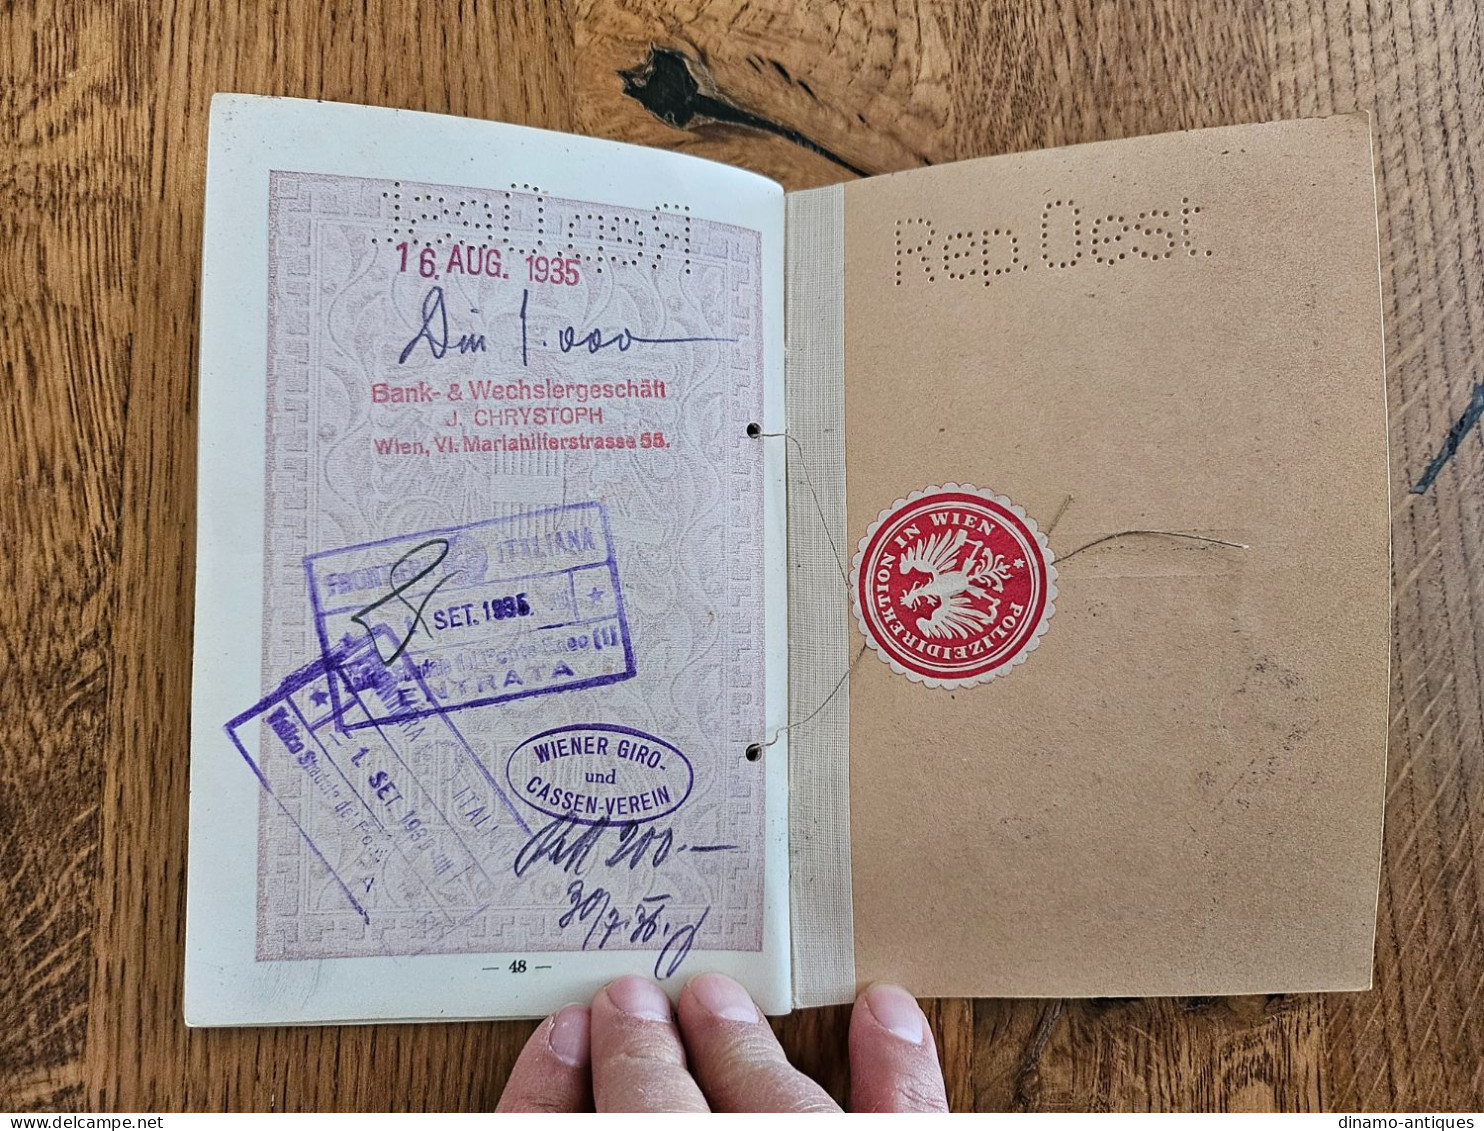 1928 Austria passport passeport reisepass issued in Wien with travel to Olympiade Berlin & Yugoslavia Hungary Czech...